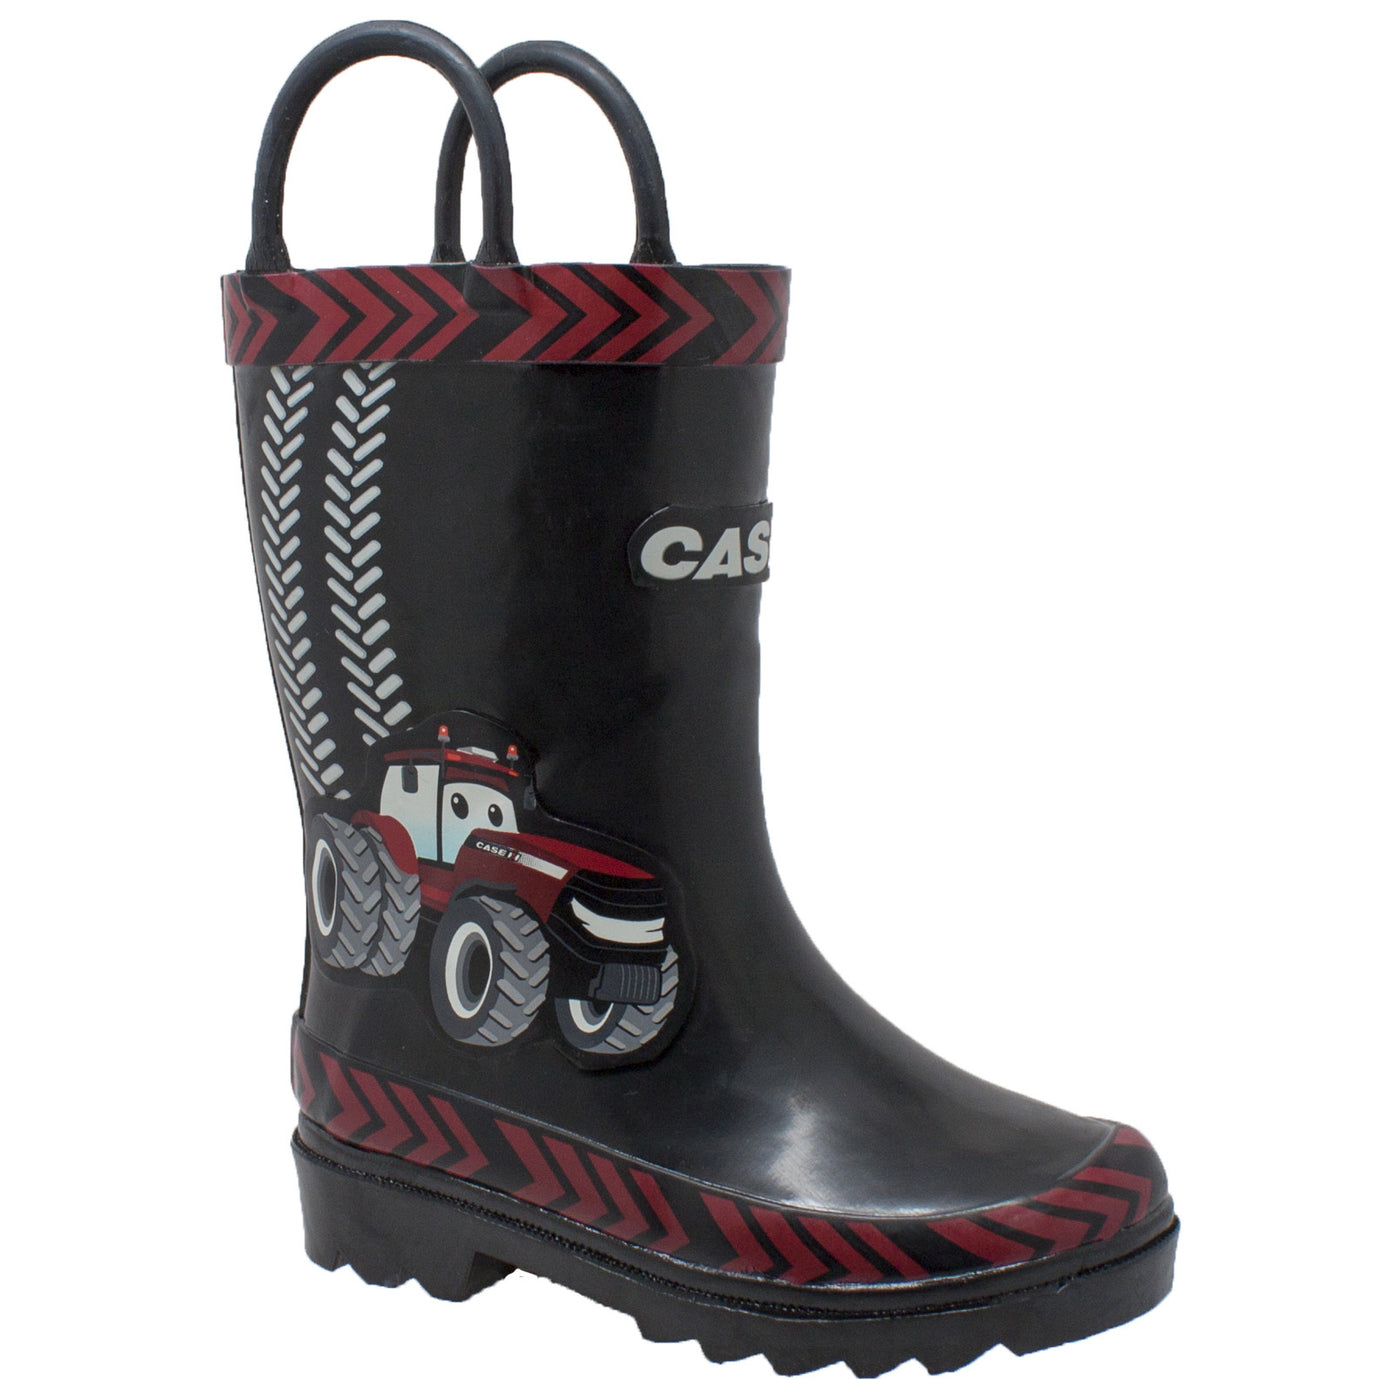 Toddler's 3D "Big Red" Rubber Boot Black - CI-5003 - Shop Genuine Leather men & women's boots online | AdTecFootWear